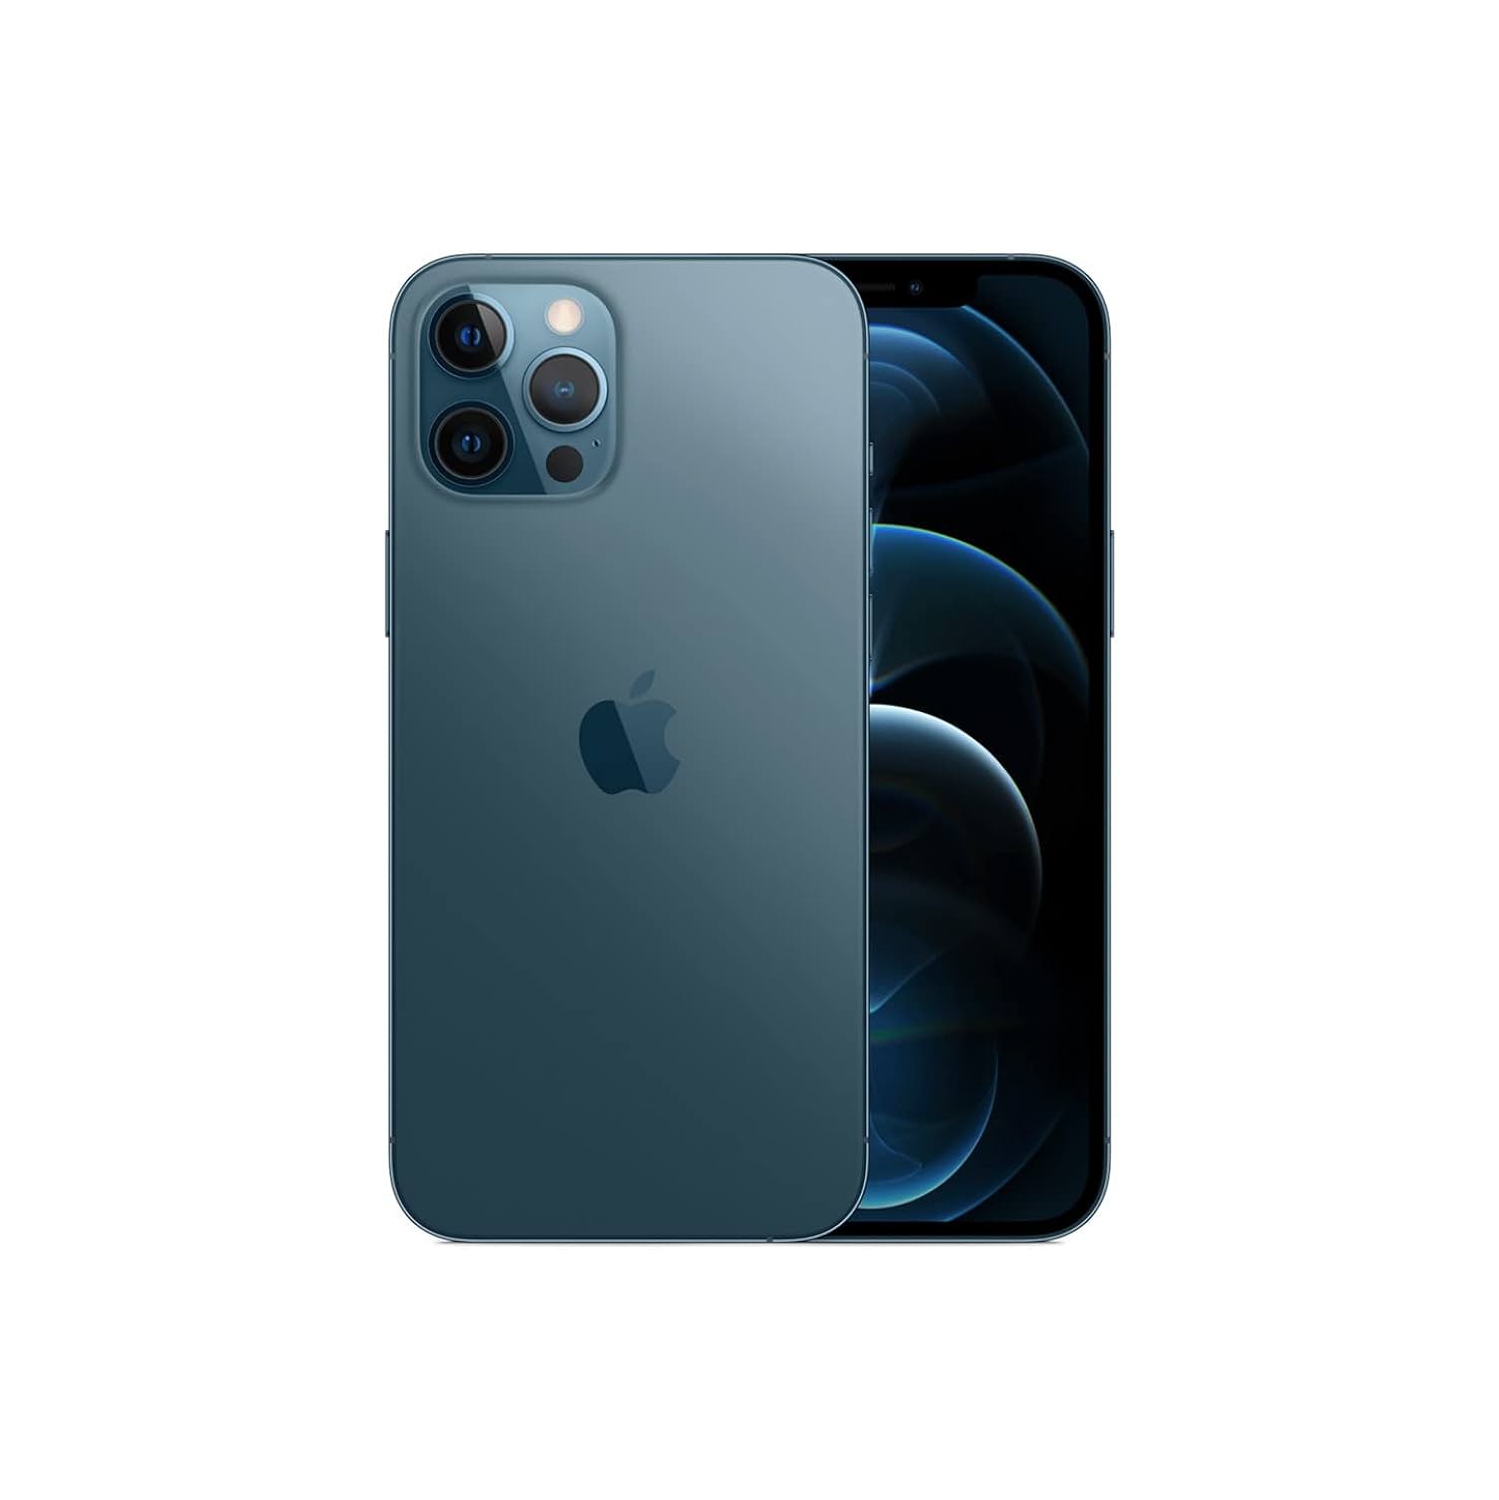 Apple iPhone 12 Pro Max 512GB Smartphone - Pacific Blue - Unlocked - Open Box